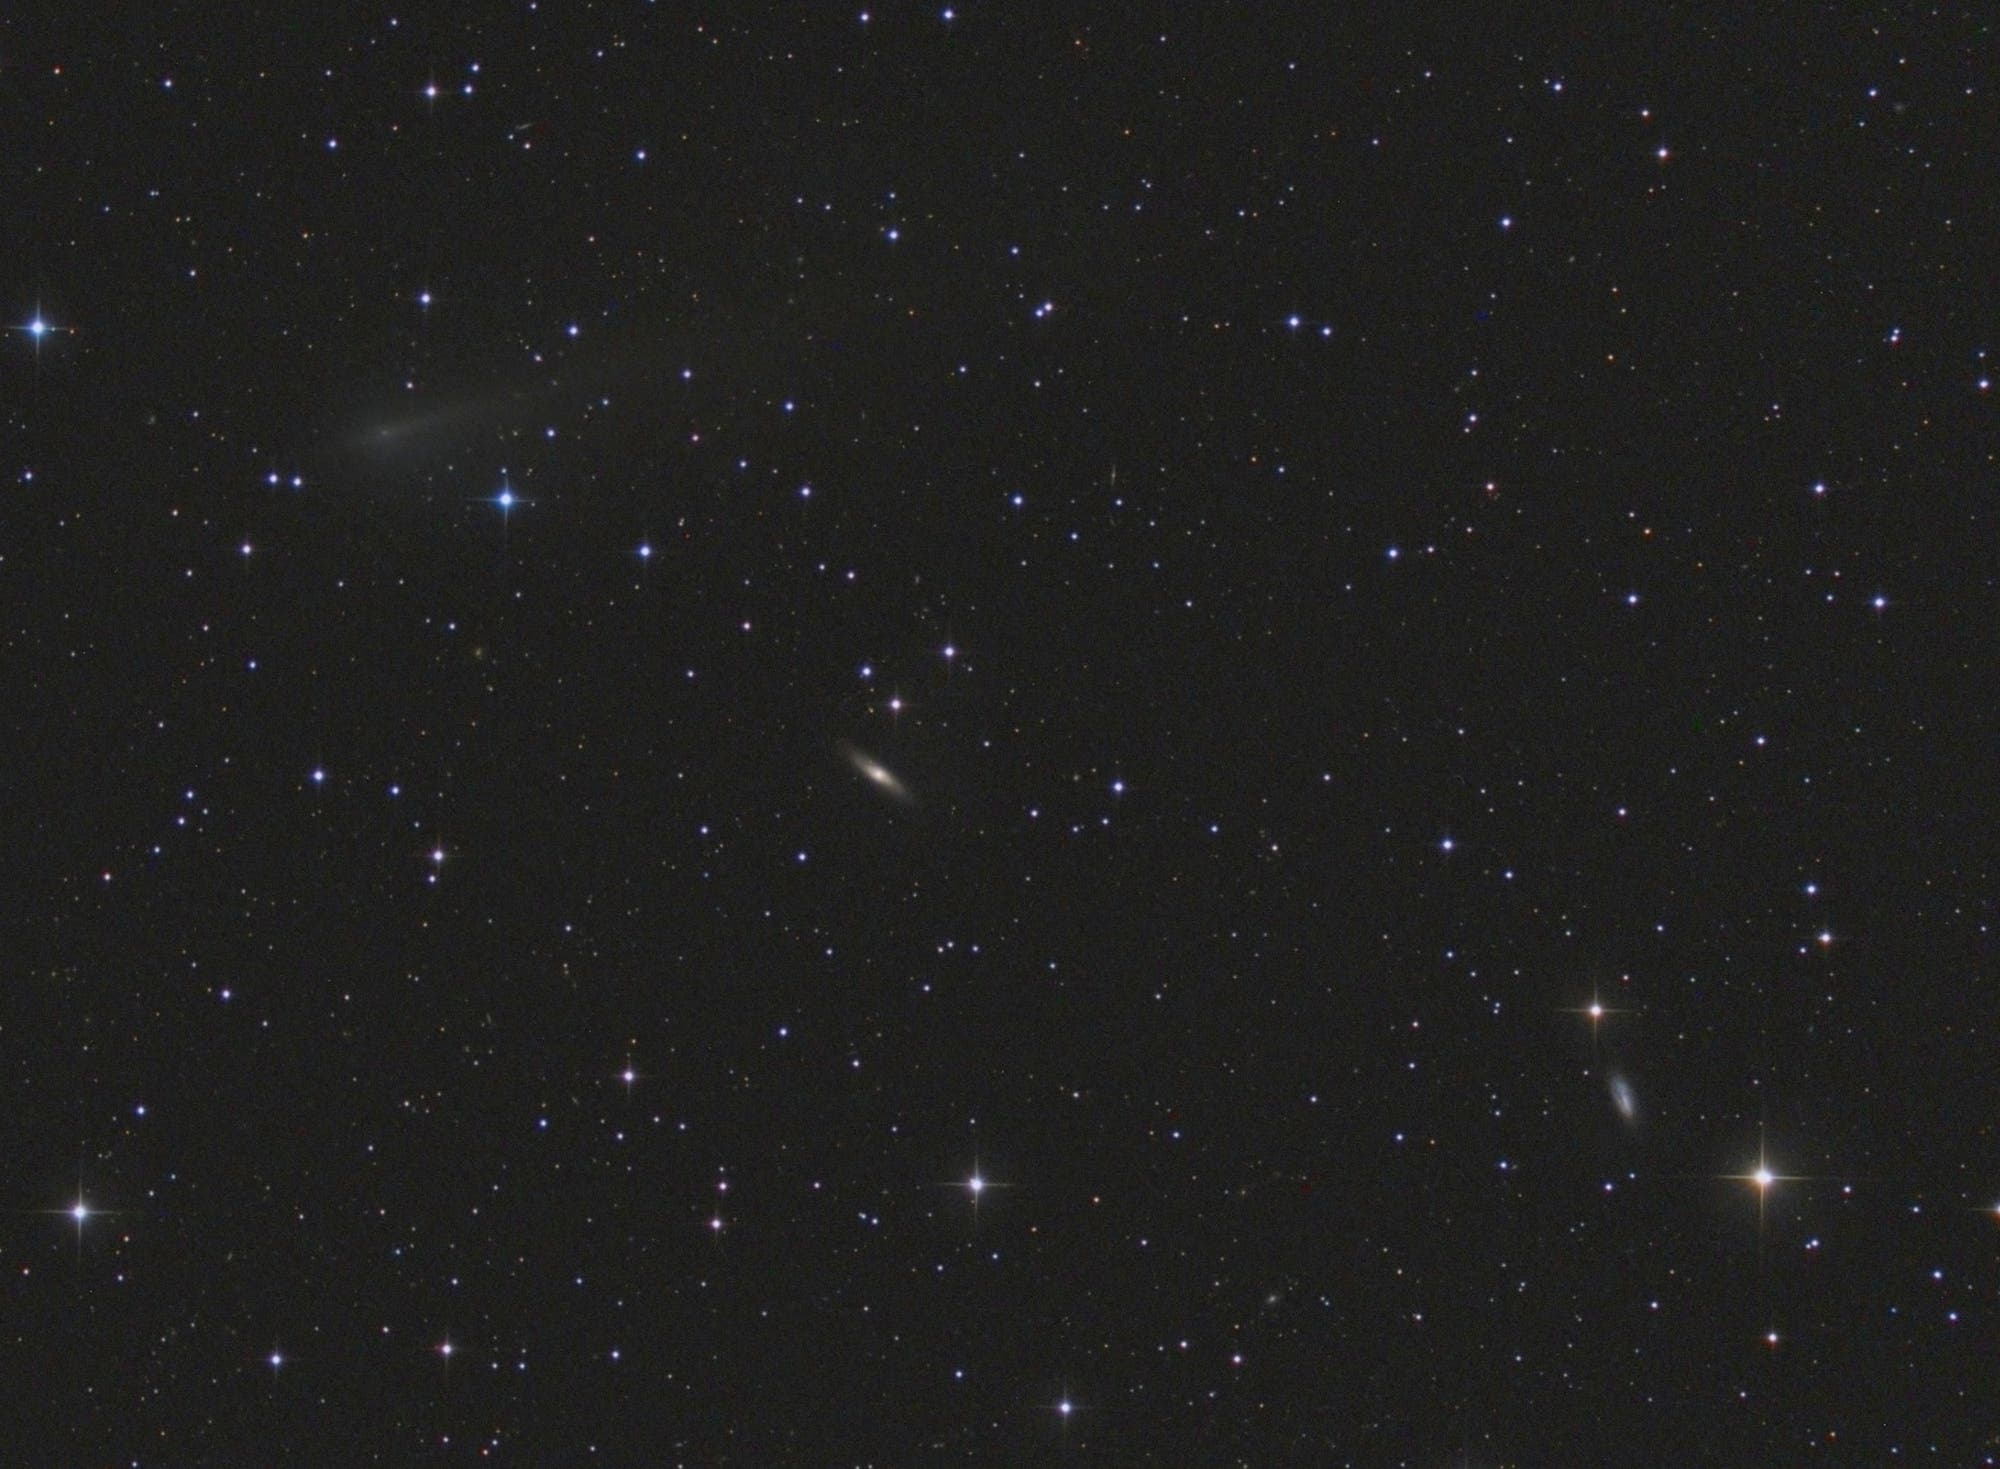 45P/Honda-Mrkos-Pajdusakova bei NGC 3301 und 3287